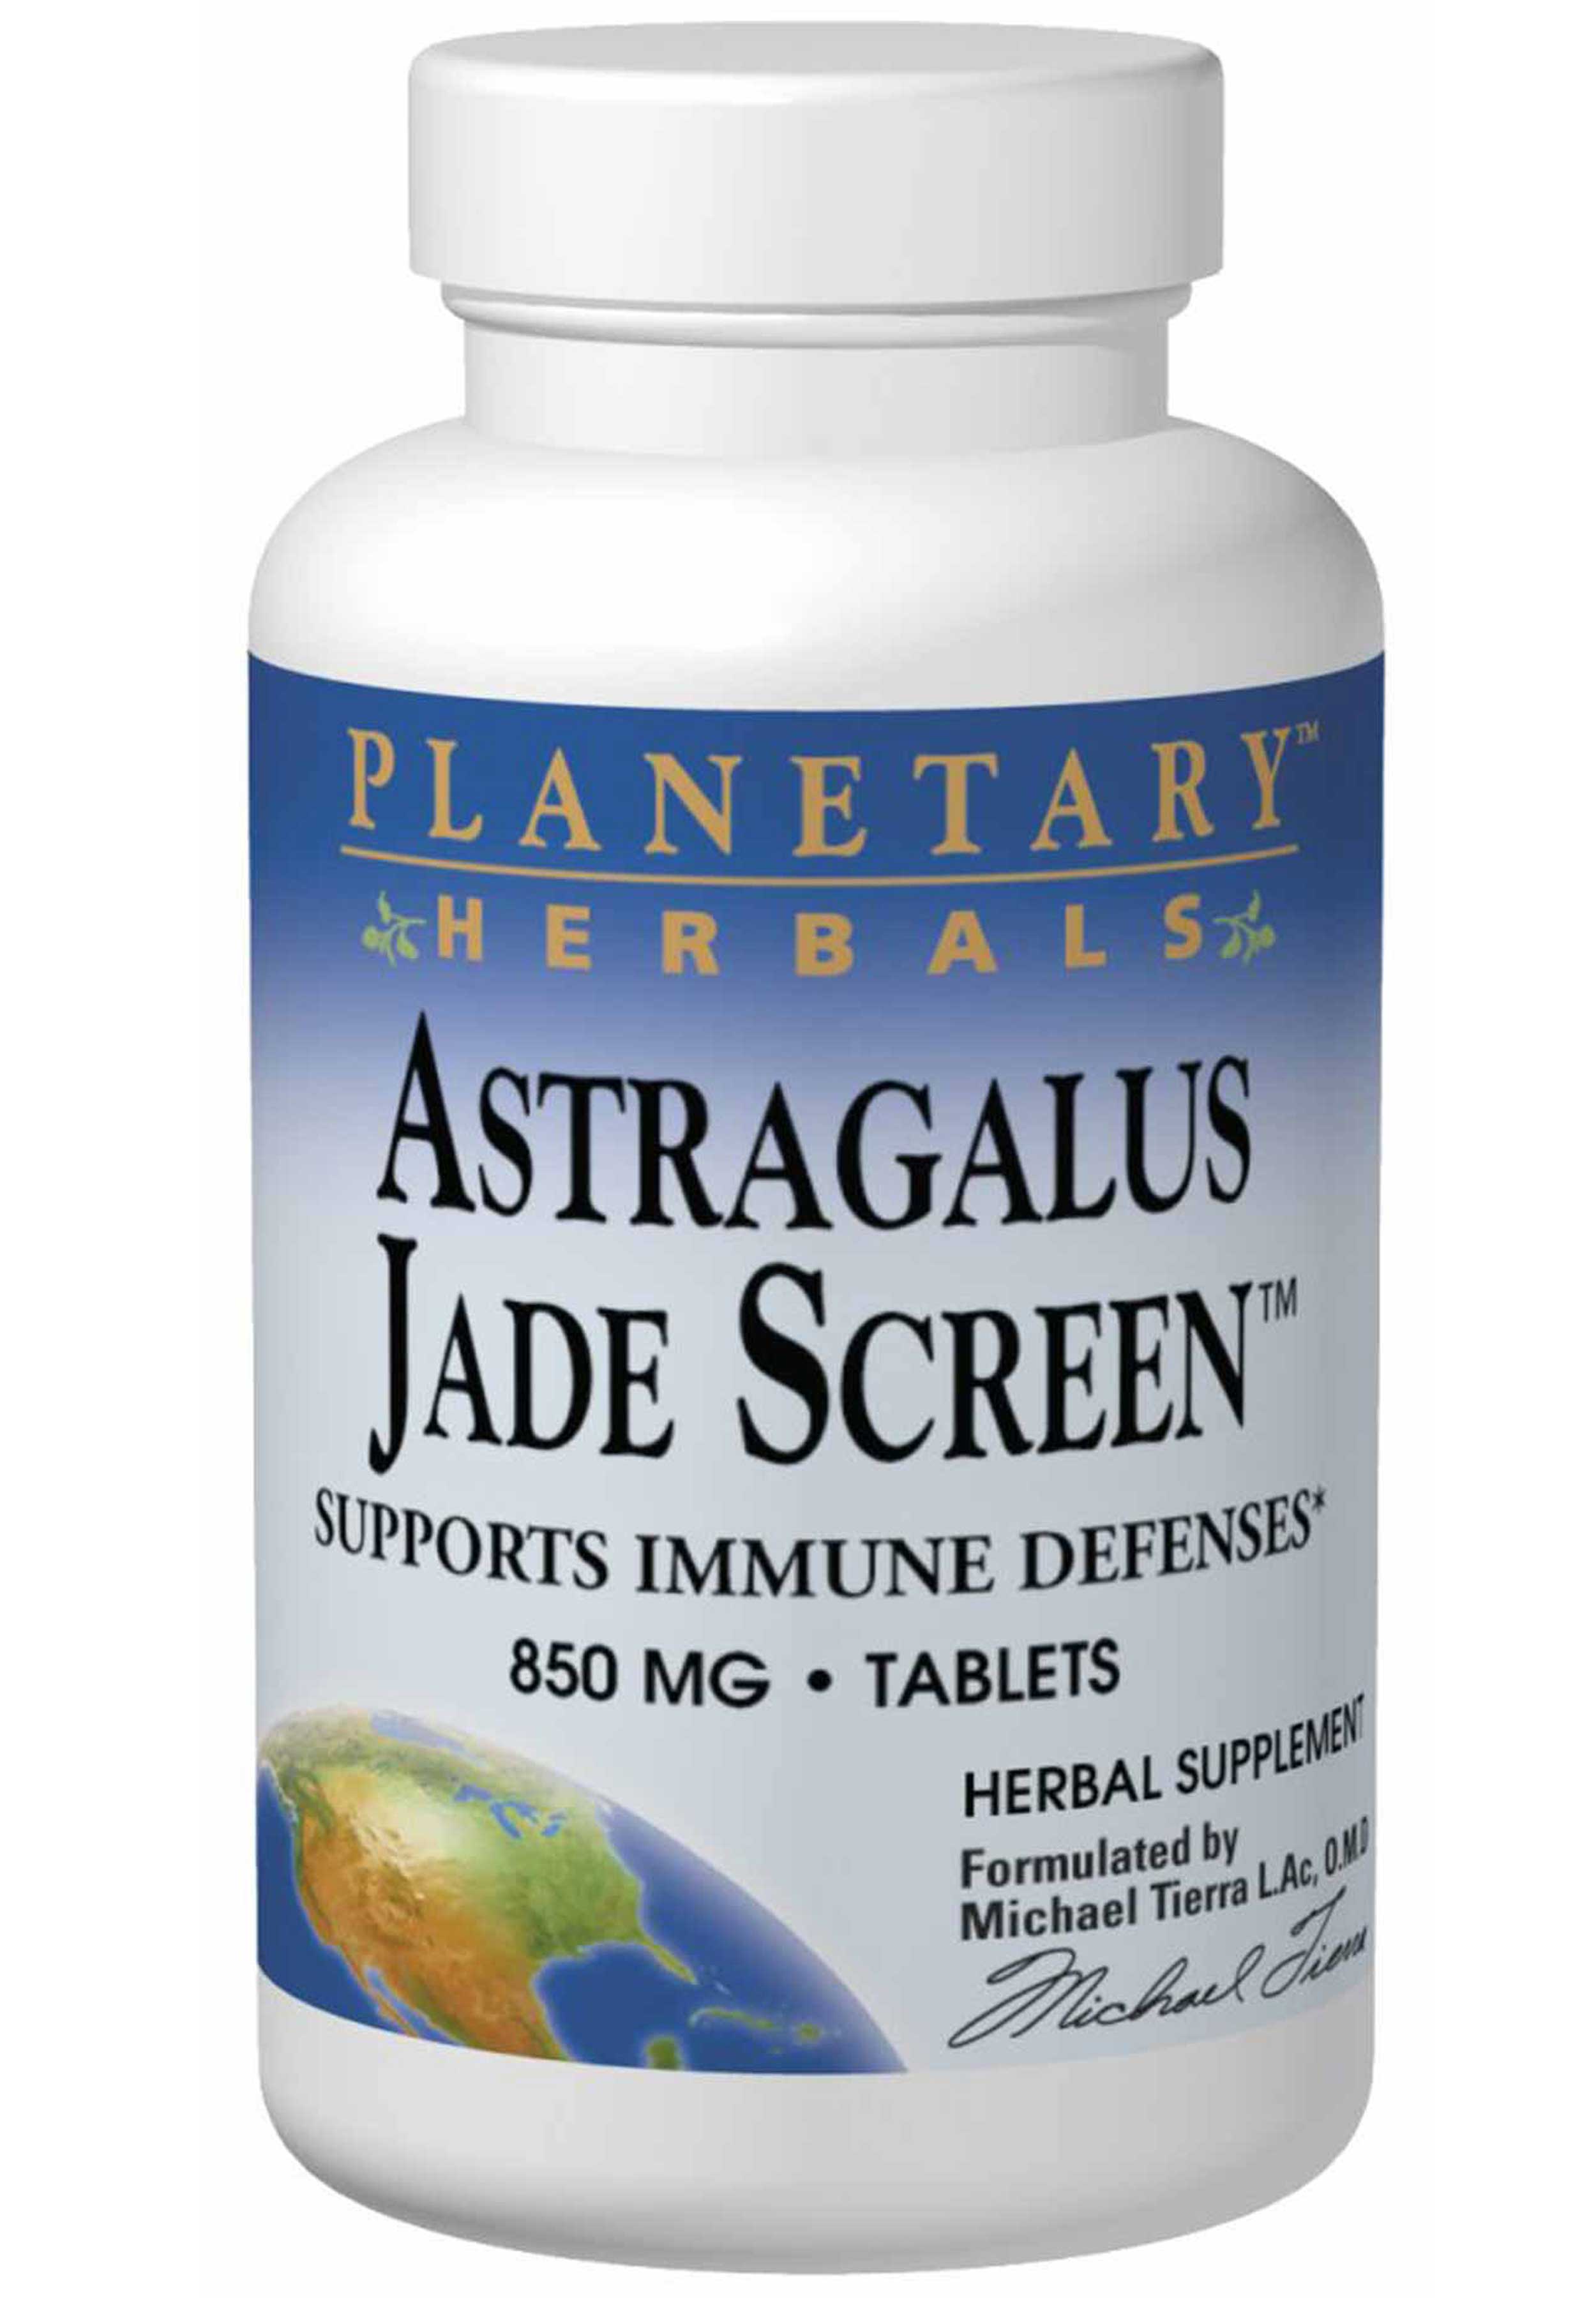 Planetary Herbals Astragalus Jade Screen 850 mg